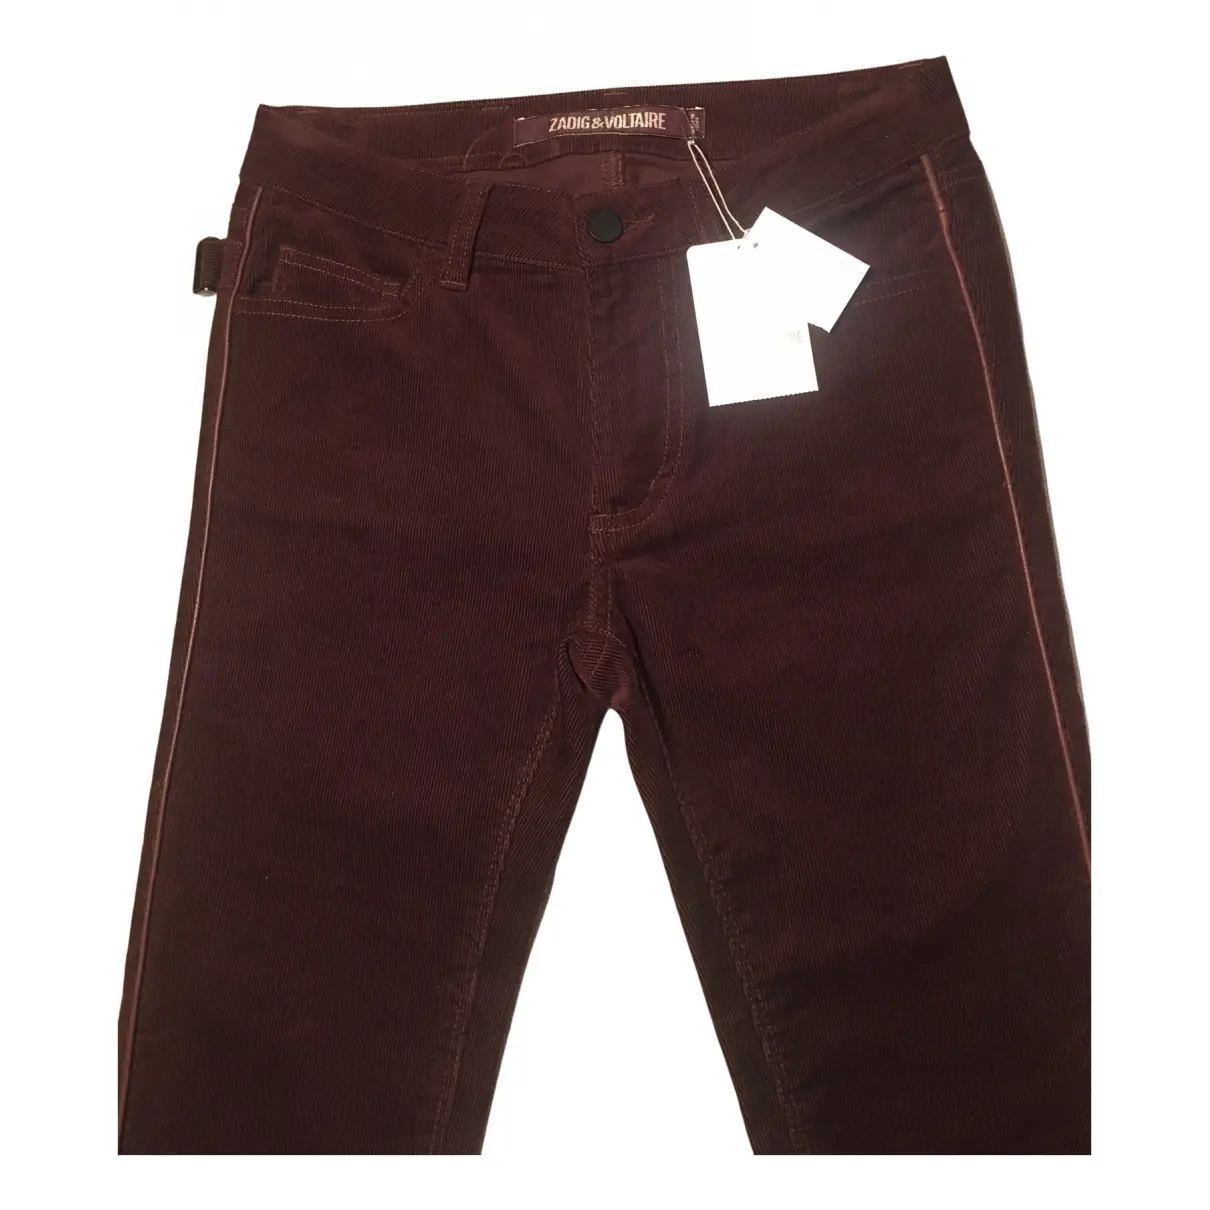 Buy Zadig & Voltaire Velvet slim pants online - Vintage